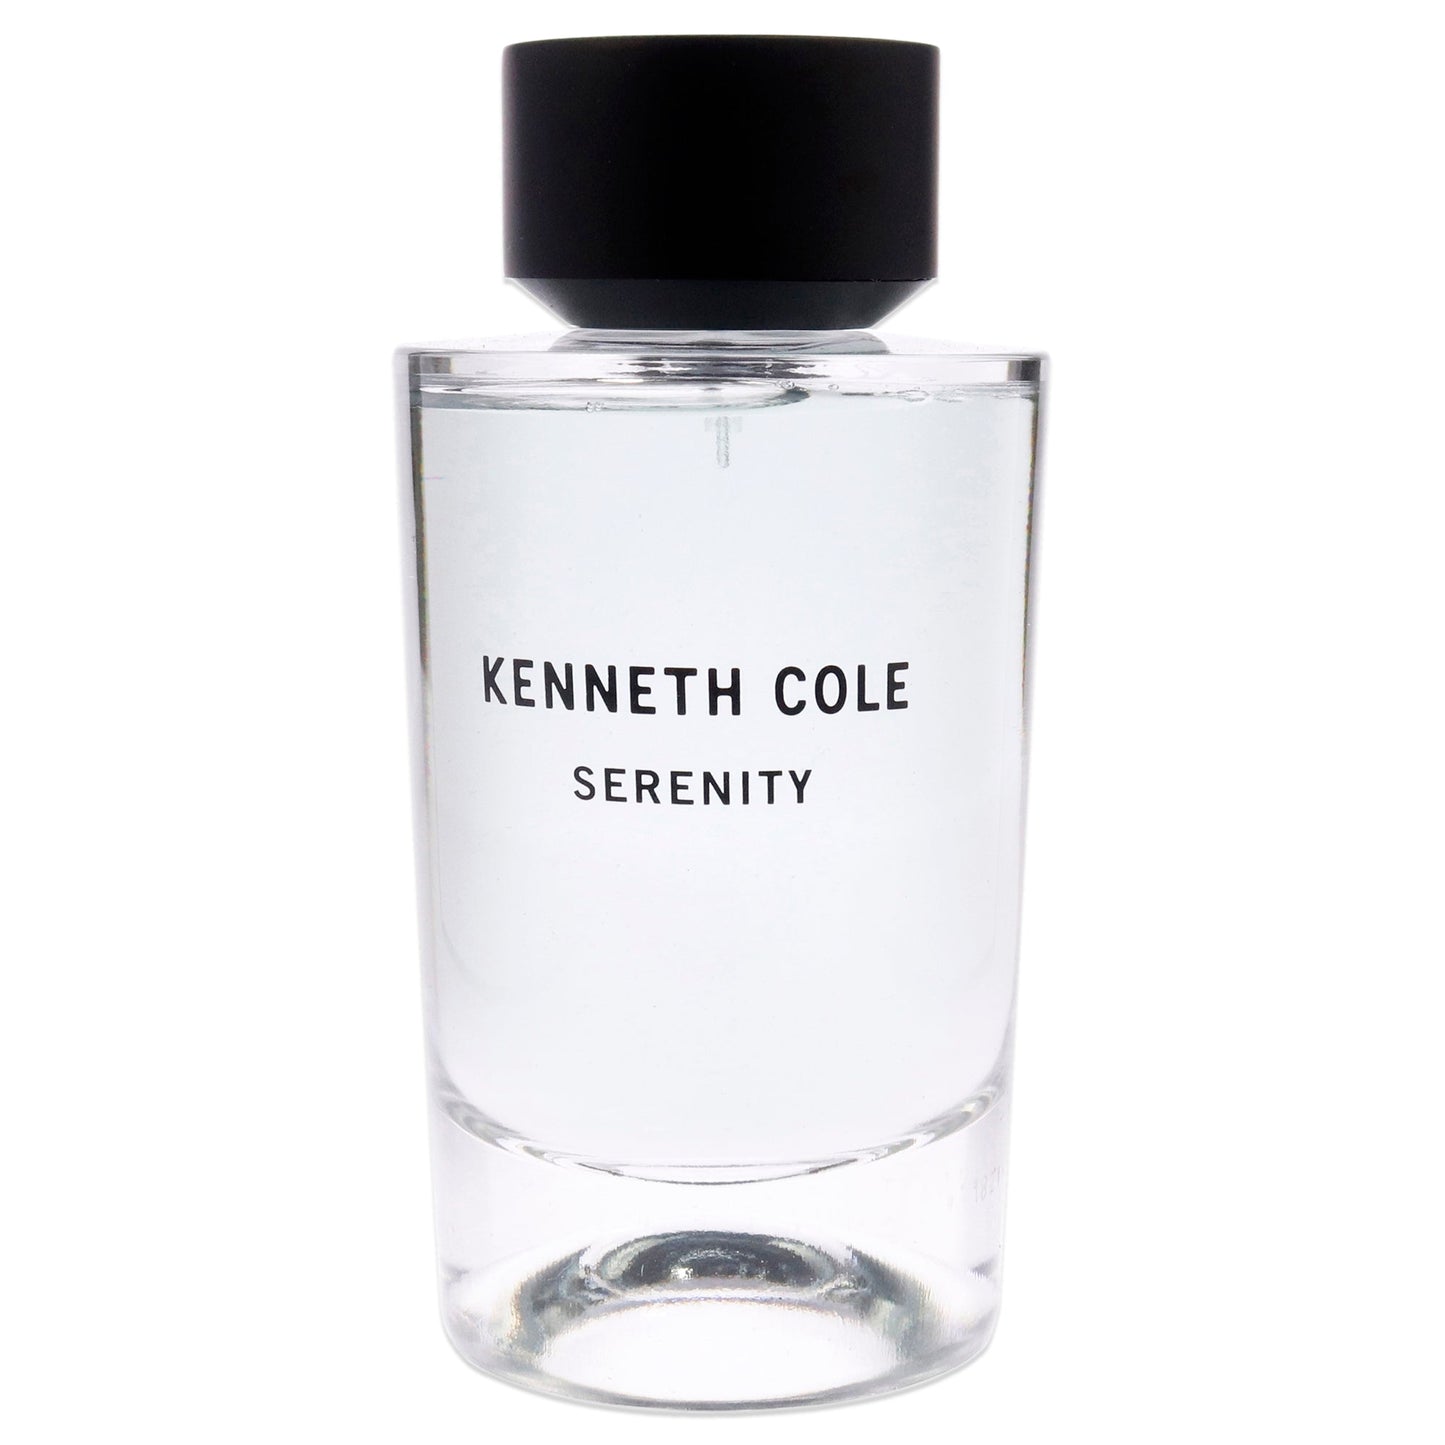 Serenity by Kenneth Cole Eau de Toilette Unisex Fragrance, 3.4 Oz